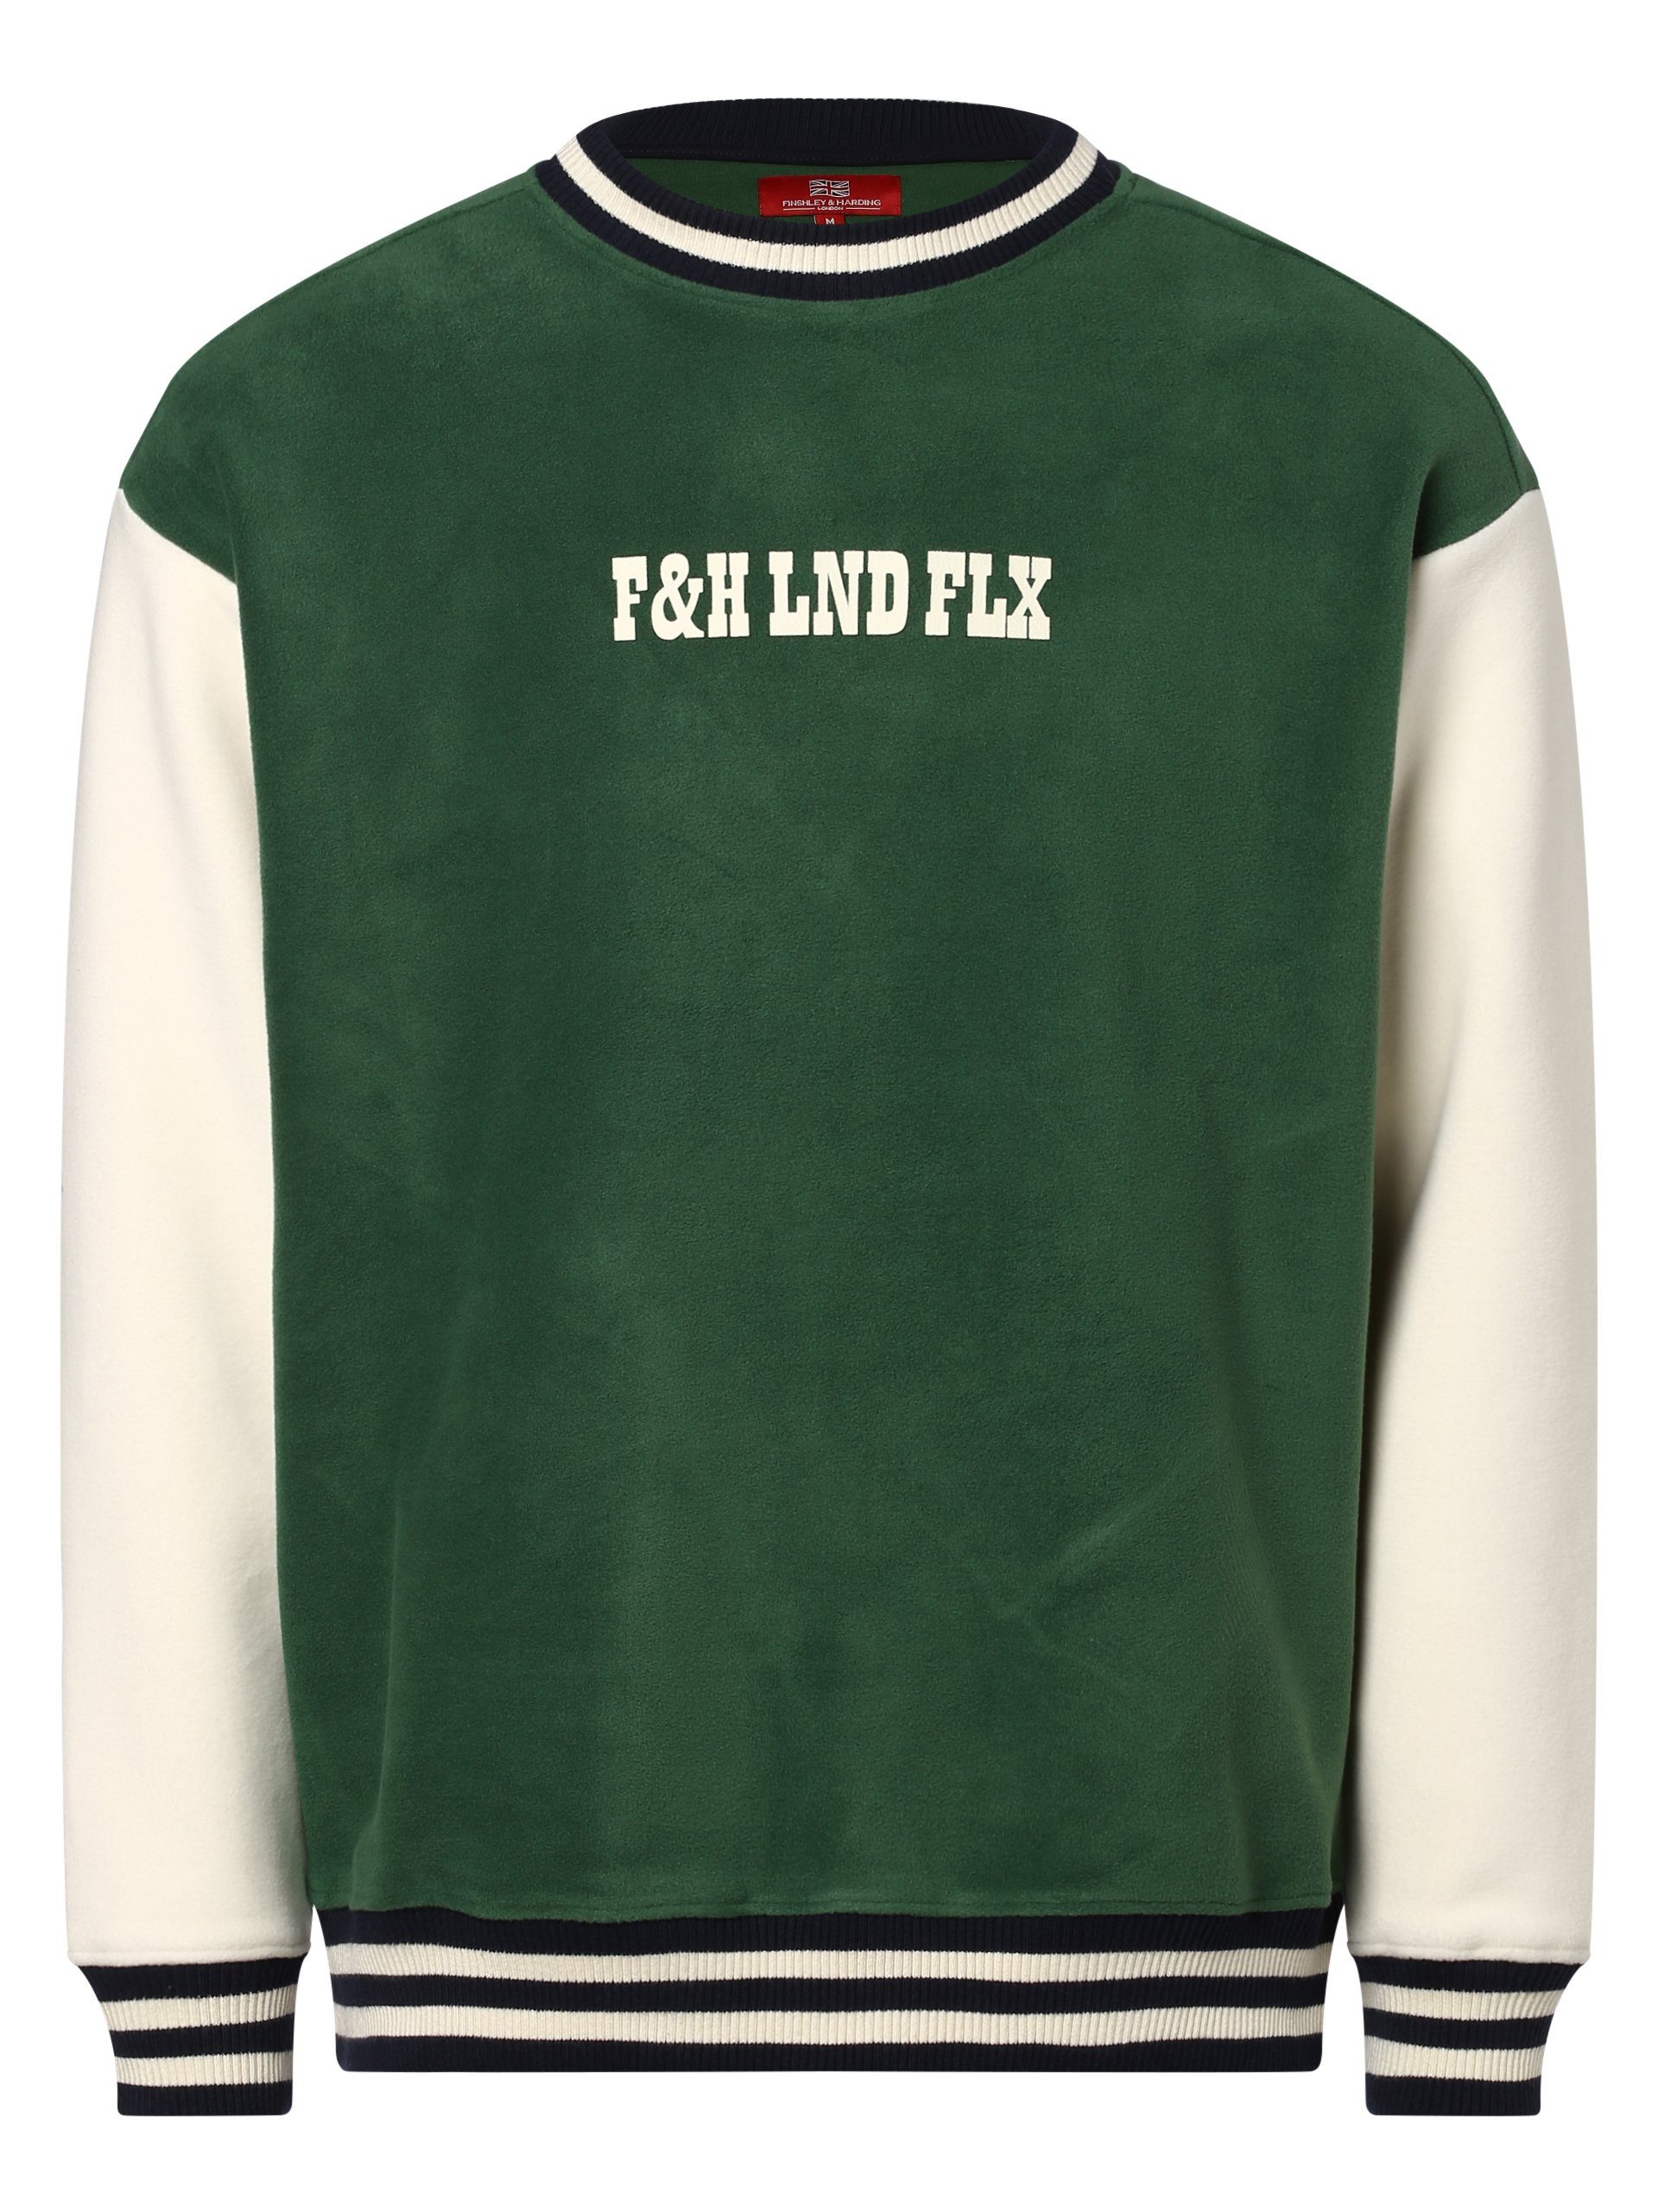 Finshley & Harding London Sweatshirt Wallace | Sweatshirts